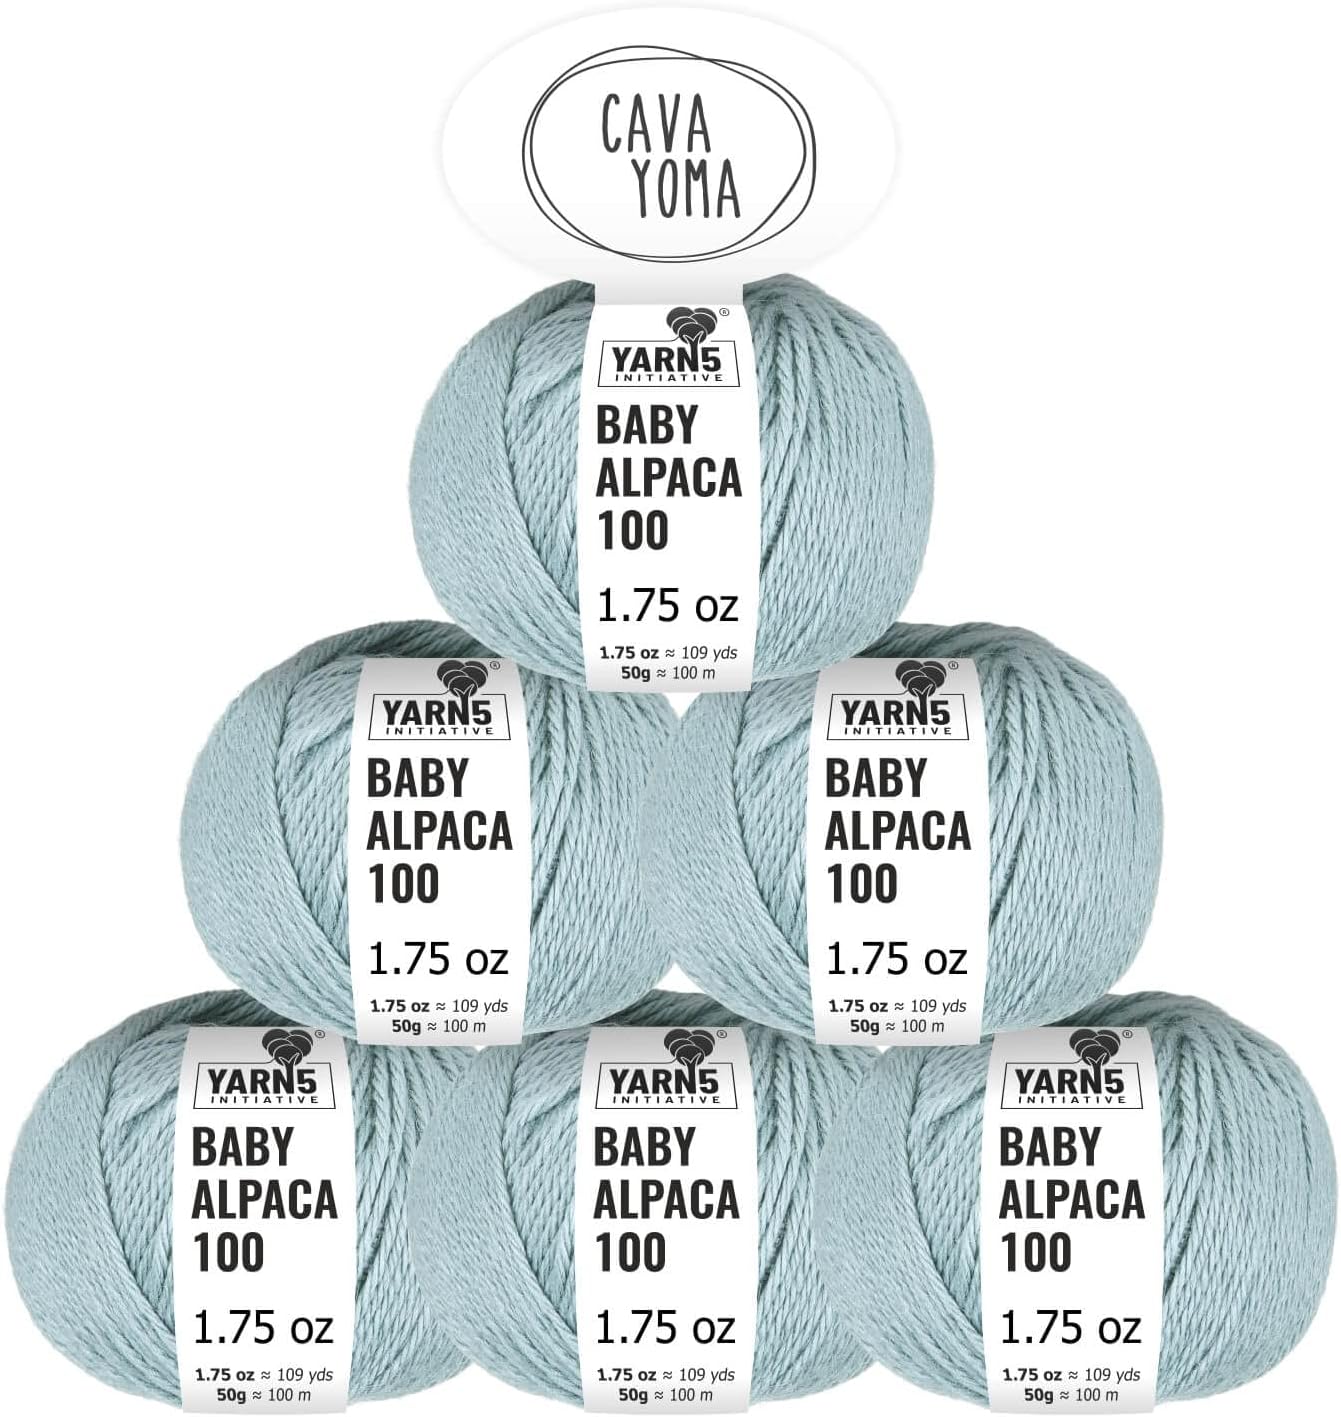 CAVAYOMA 100% baby alpaca yarn light Worsted in 35+ colours